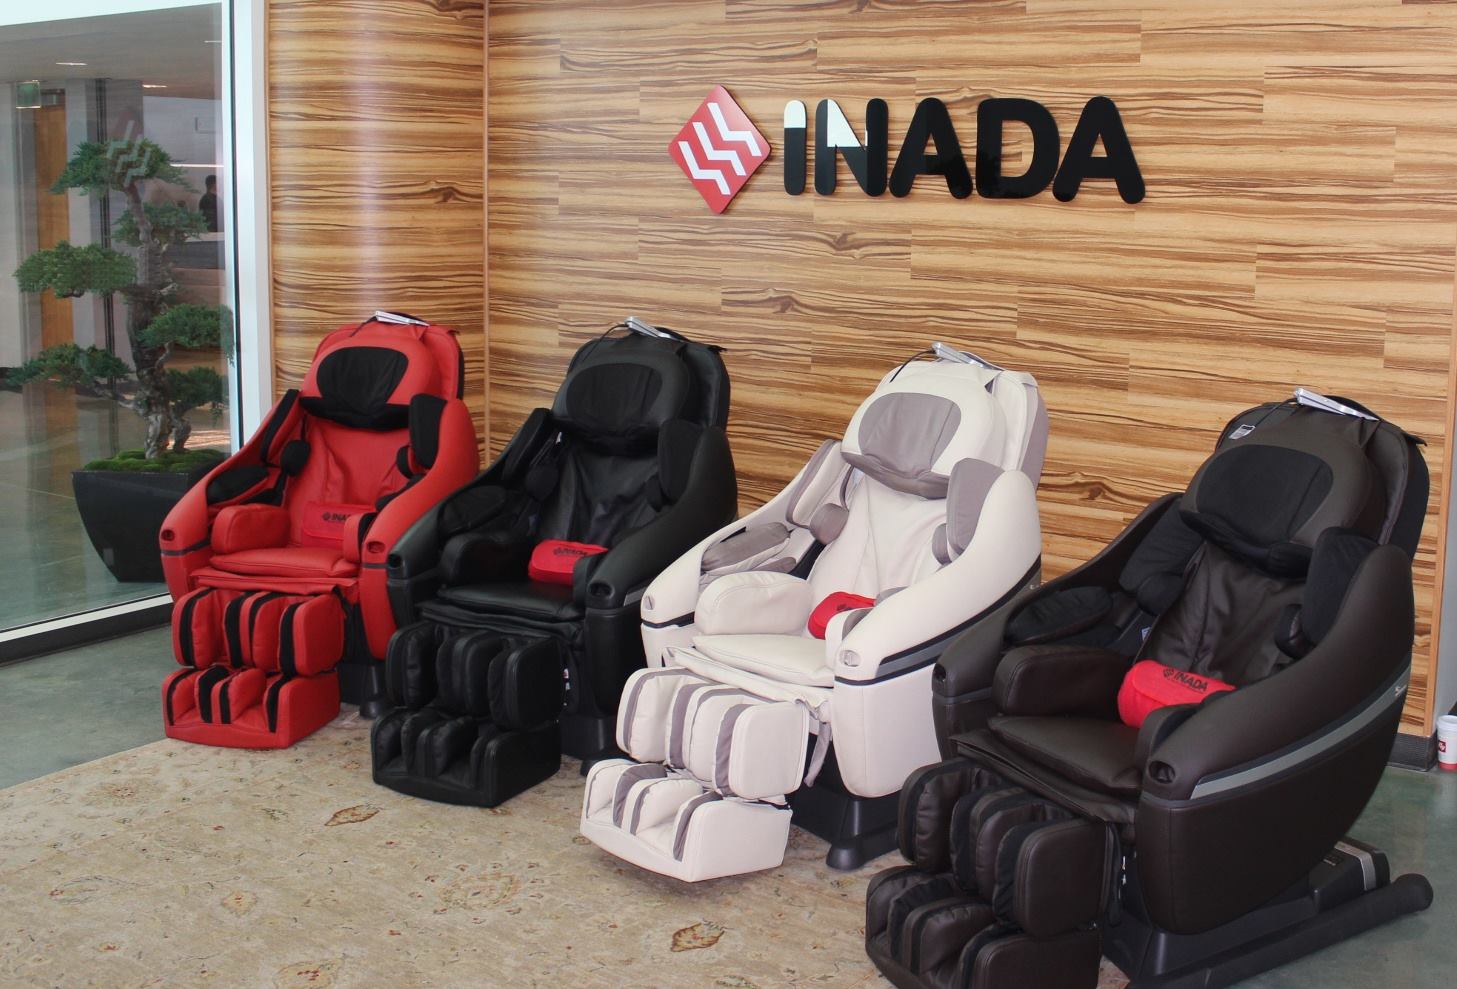 Inada Massage Chairs at Costco Lakewood